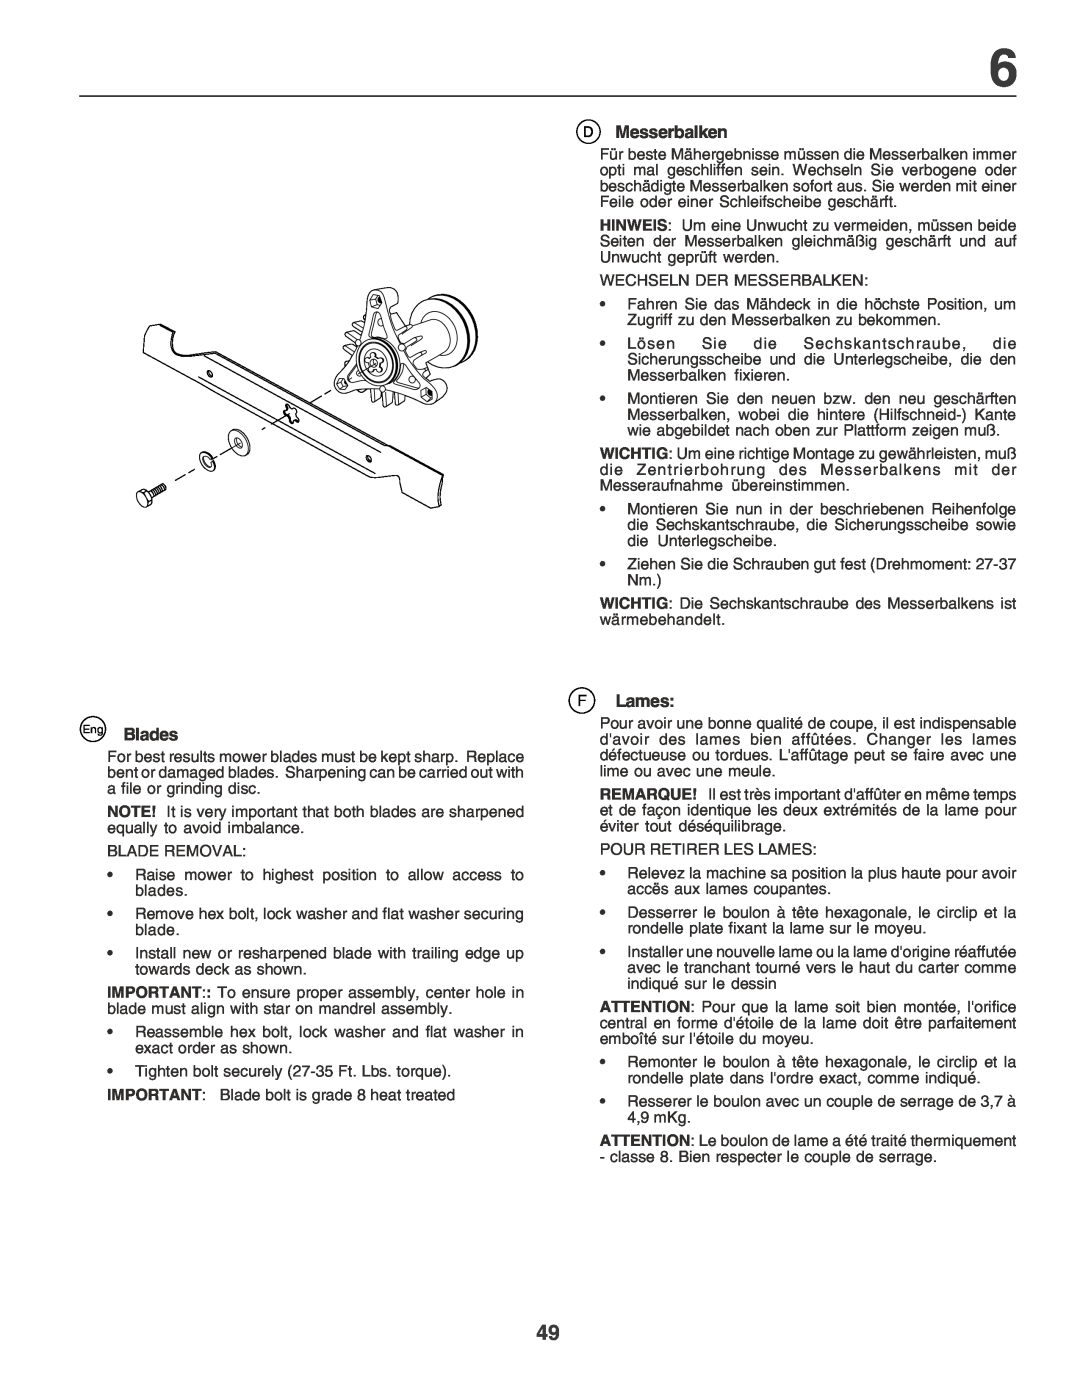 Husqvarna LT135 instruction manual Eng Blades, Messerbalken, F Lames 